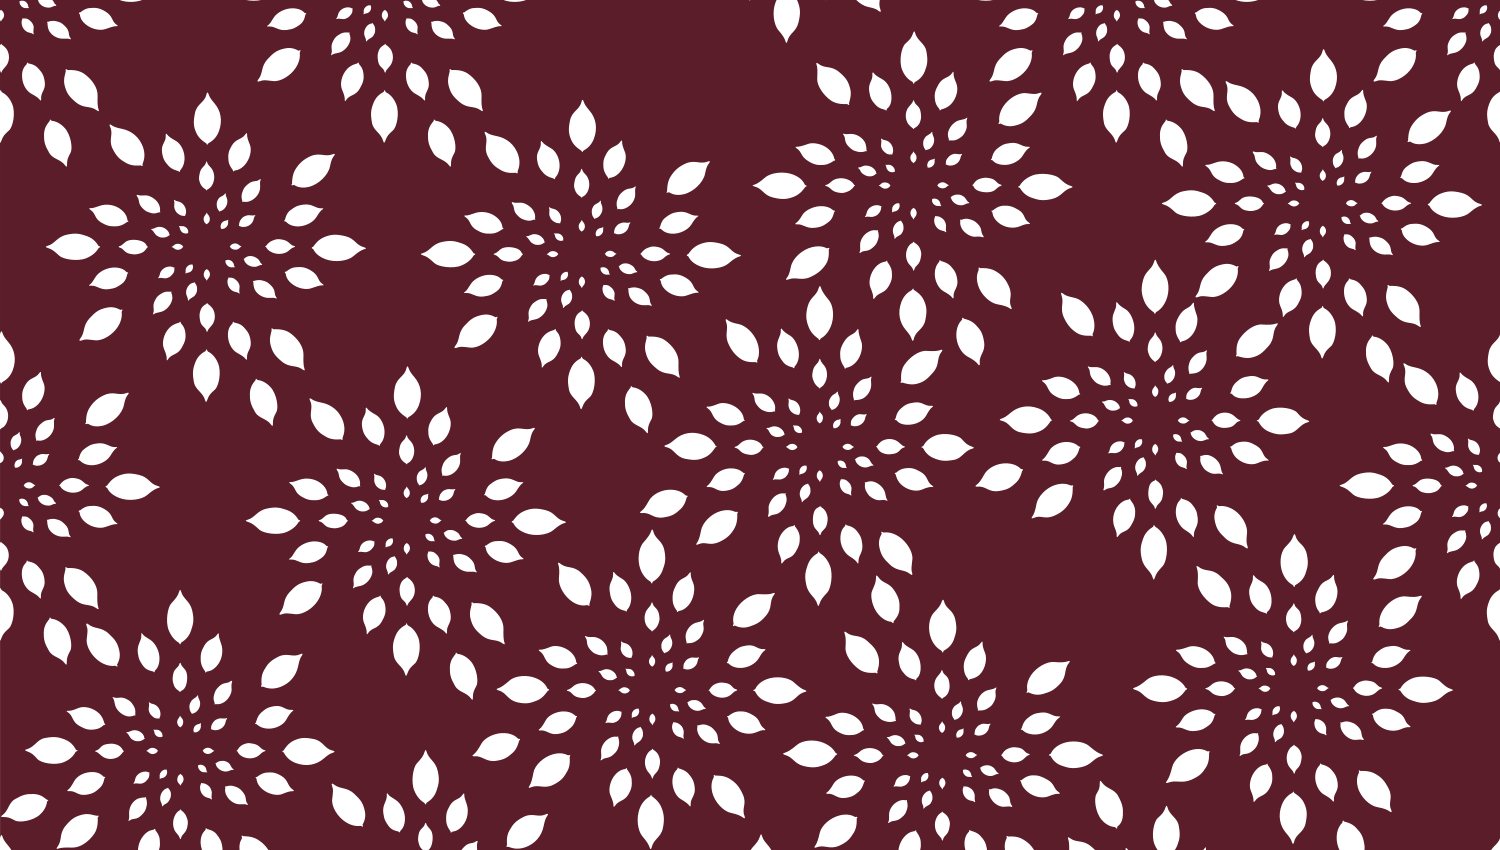 Parasoleil™ Lemon Drop© pattern displayed with a burgundy color overlay